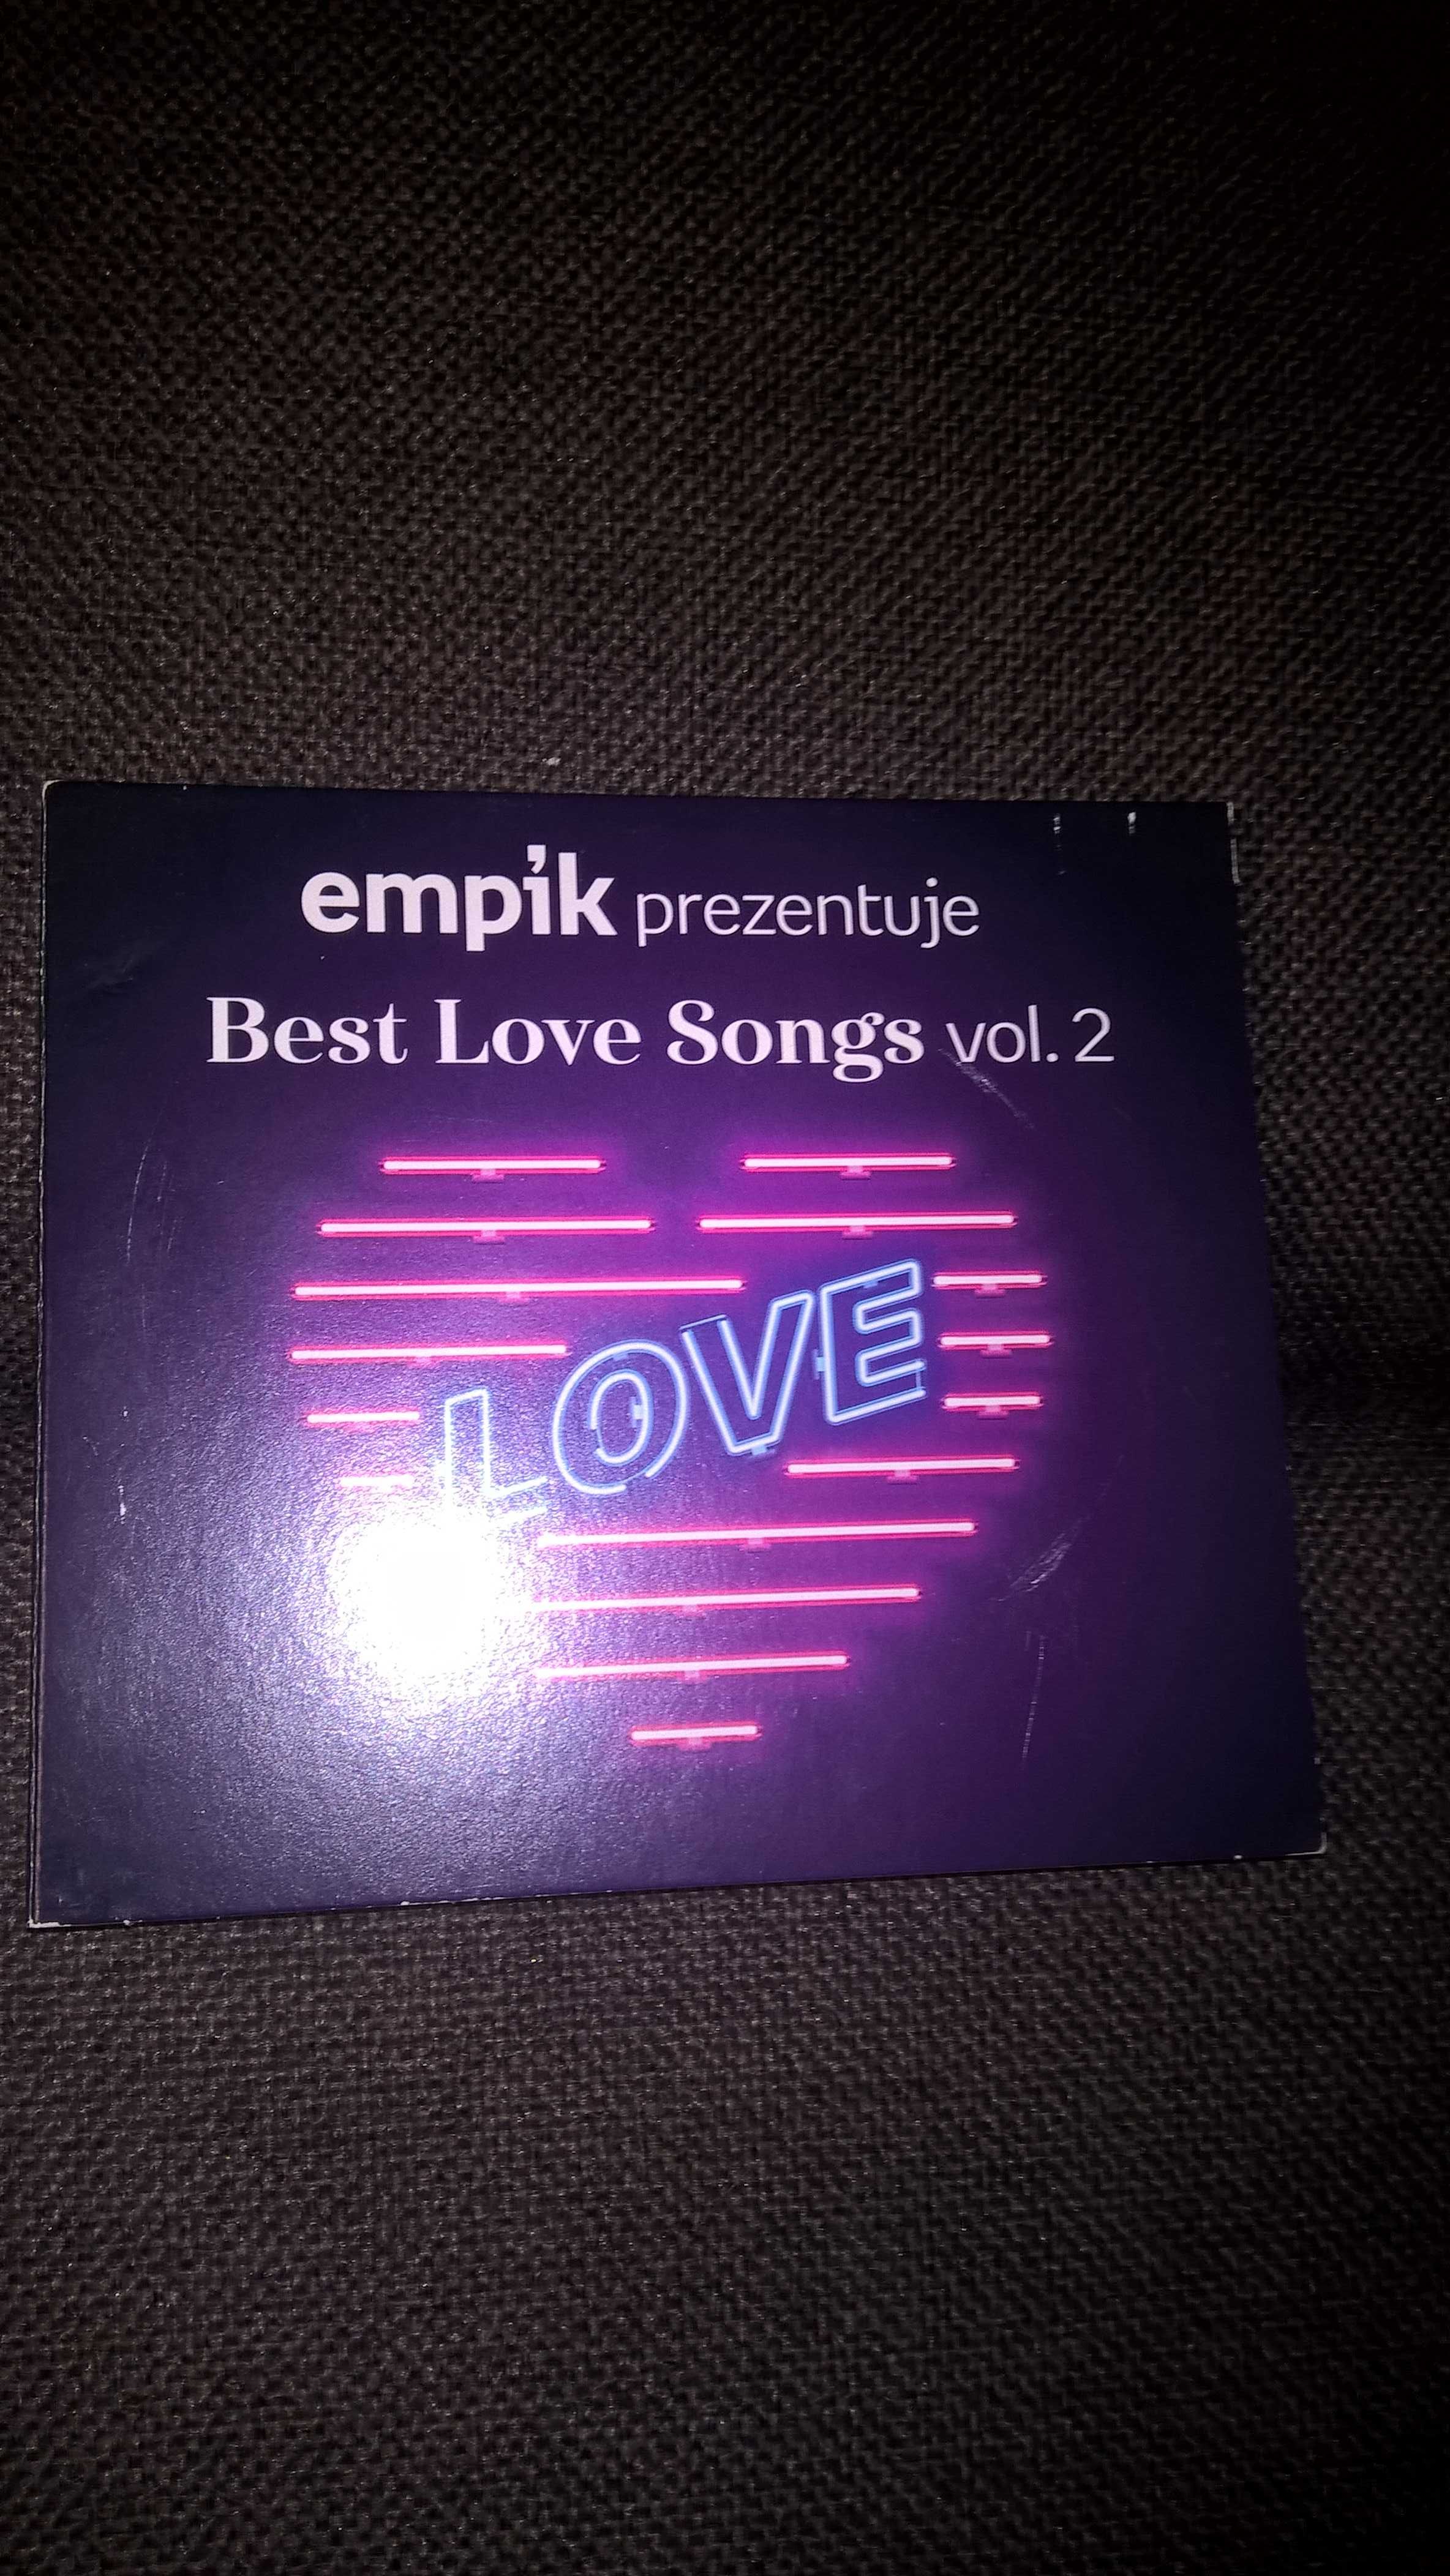 CD1+CD2 Best Love Songs vol. 2 LOVE Empik prezentuje